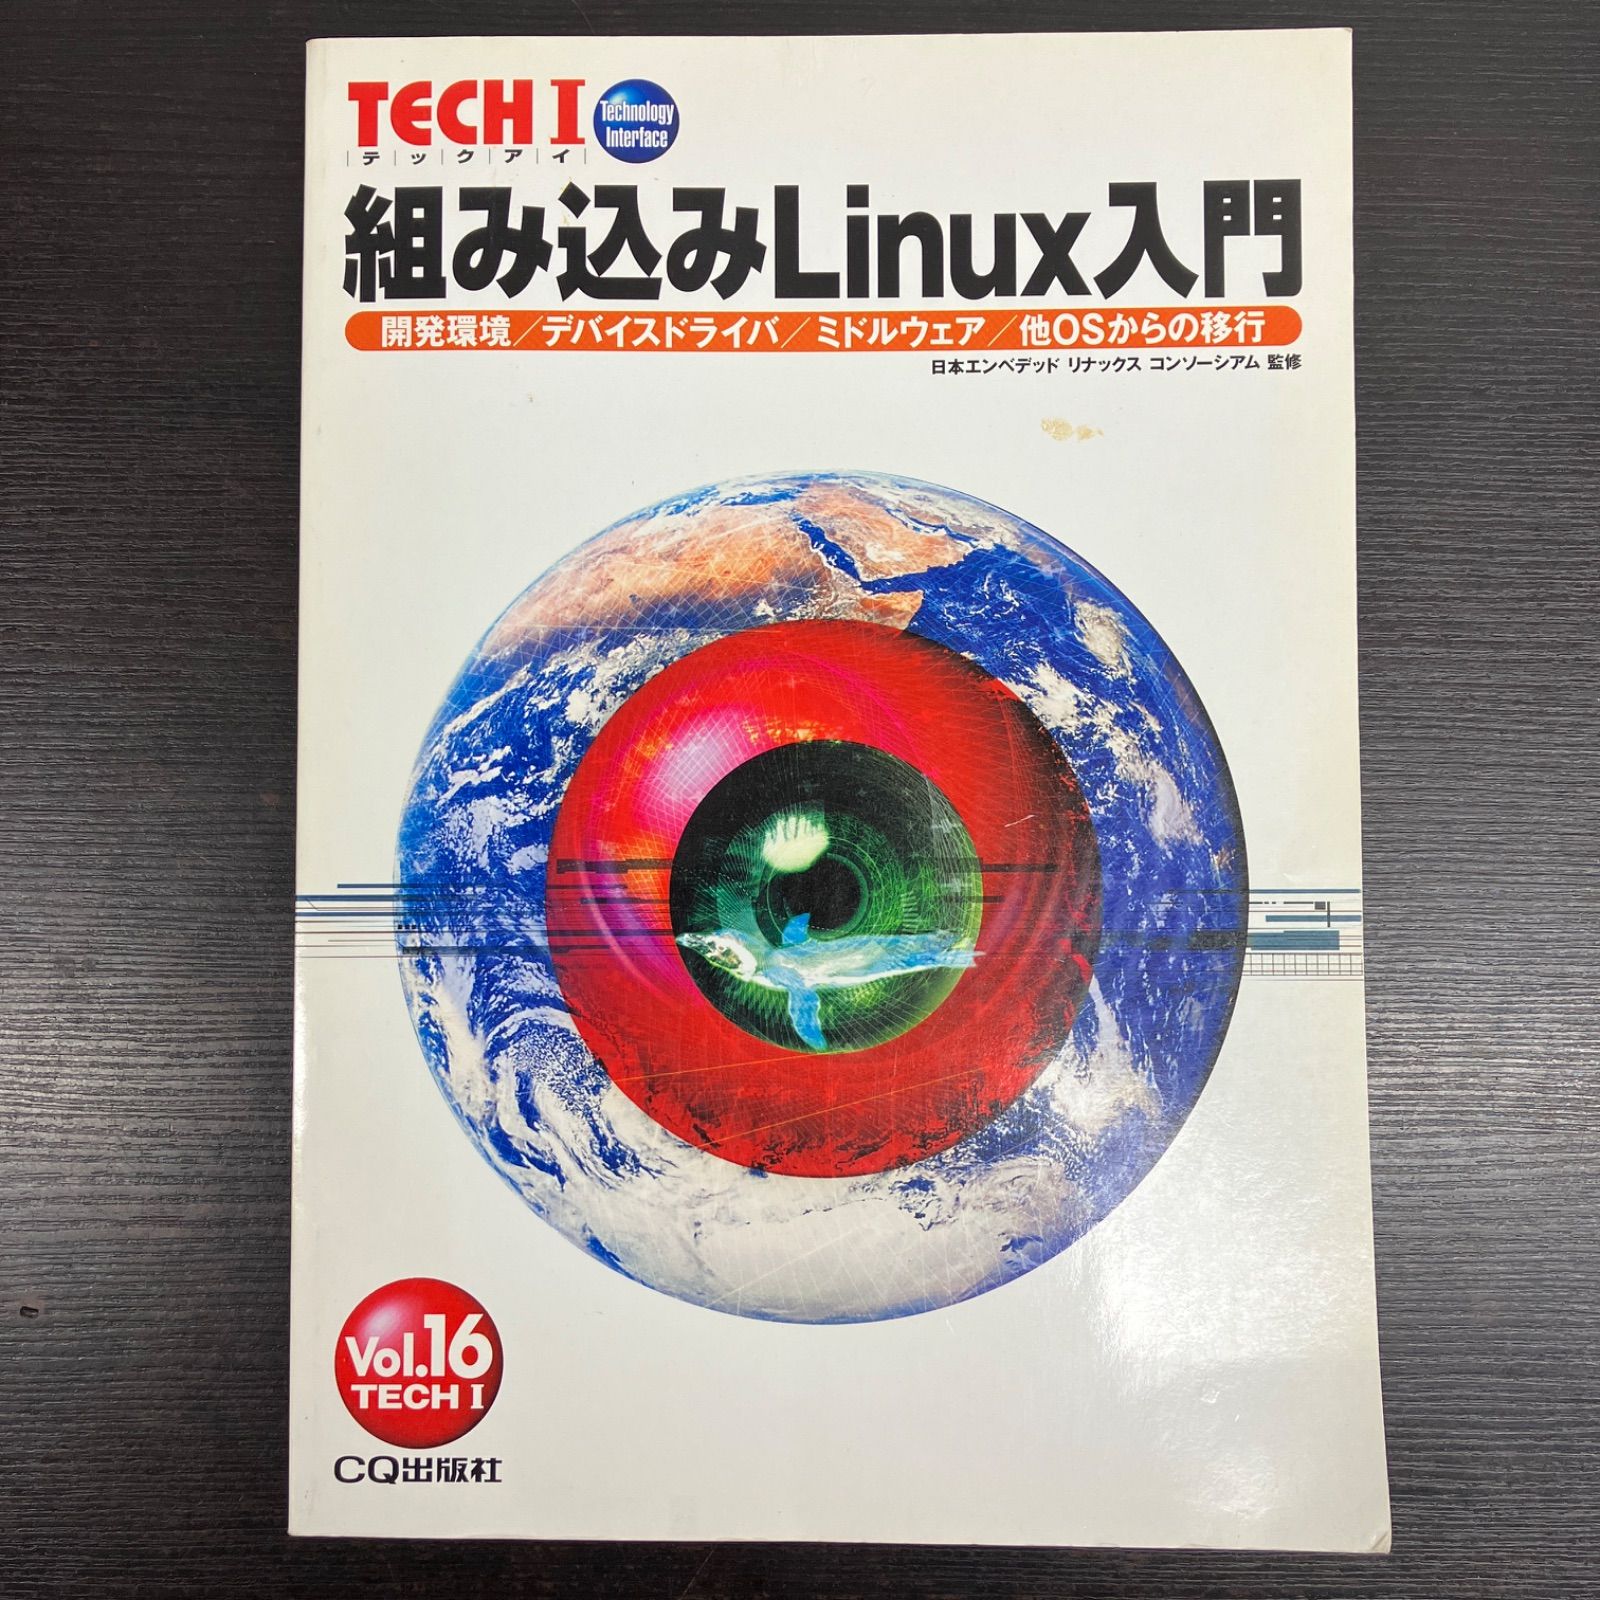 TECH I テックアイ VOl.16 組み込みLinux入門 開発環境/デバイス